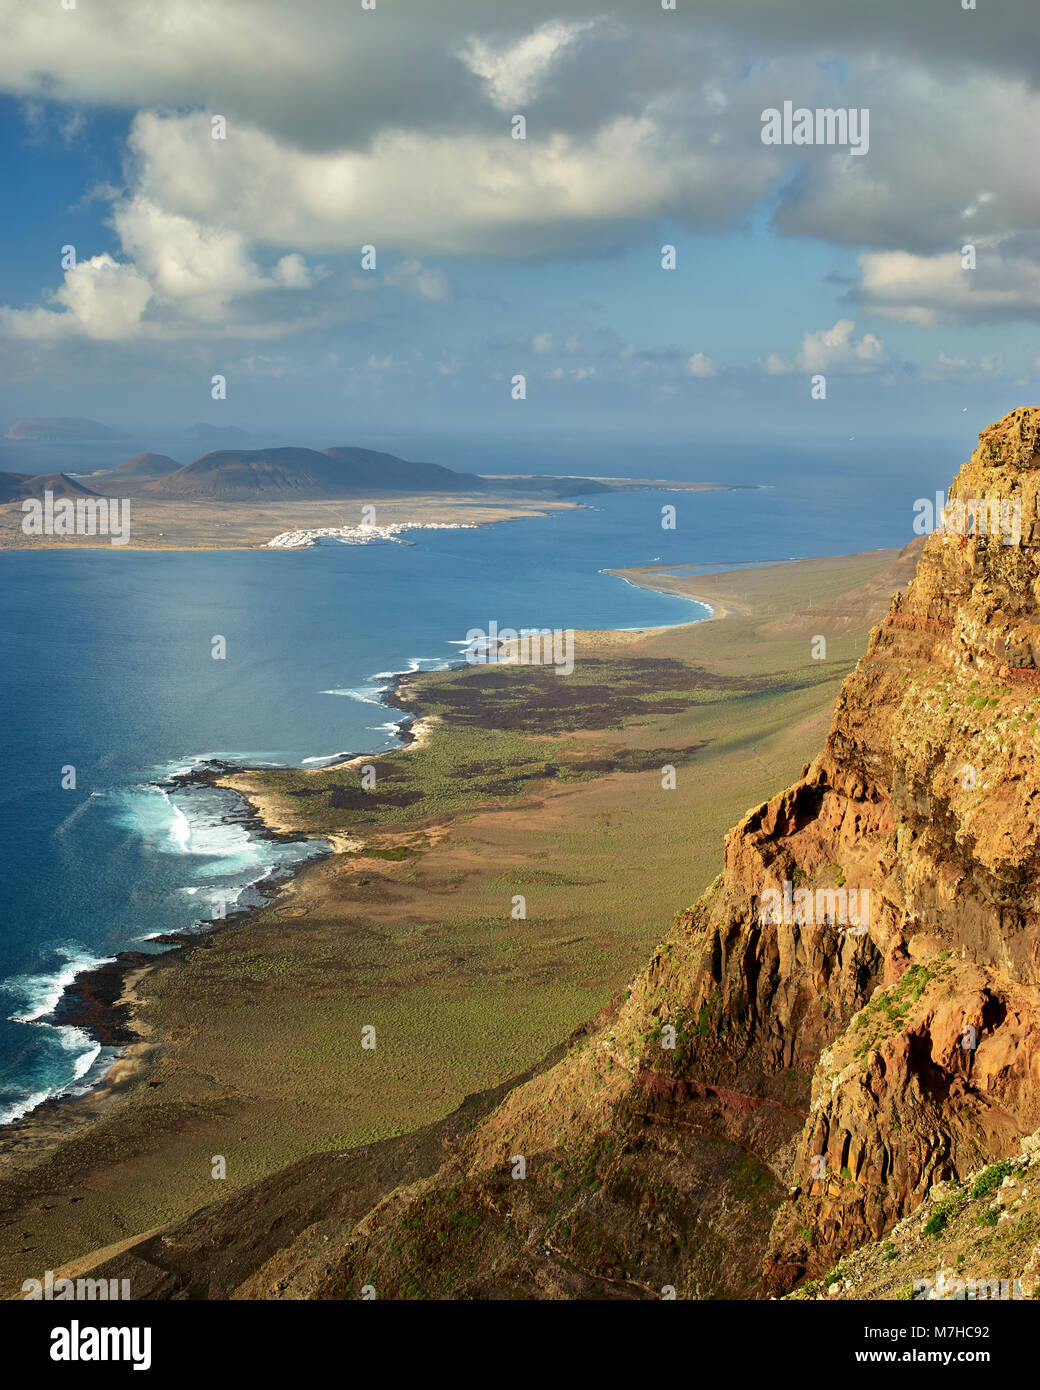 Isla Graciosa, part of the Chinijo Archipelago, seen from near Guinate, Lanzarote, Canary Islands, Spain Stock Photo